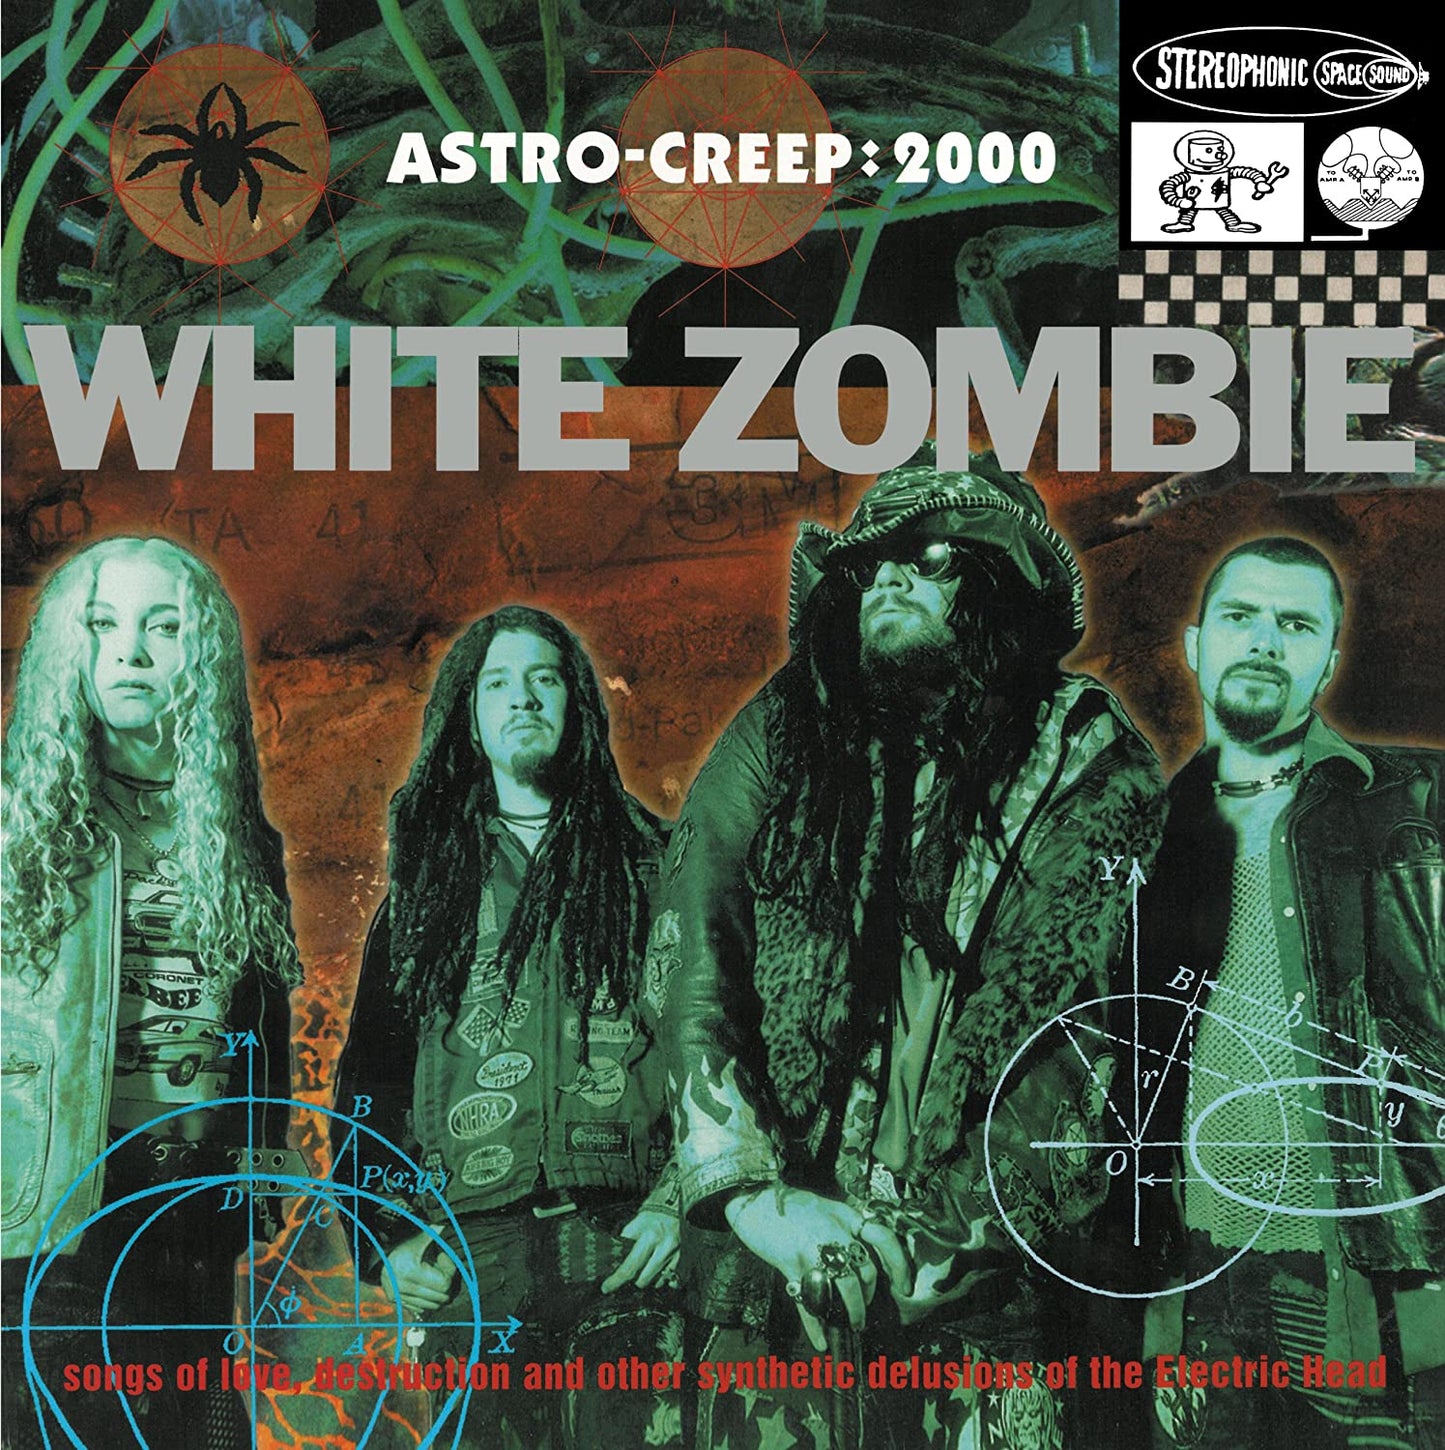 White Zombie/Astro-Creep: 2000 (Audiophile Pressing) [LP]